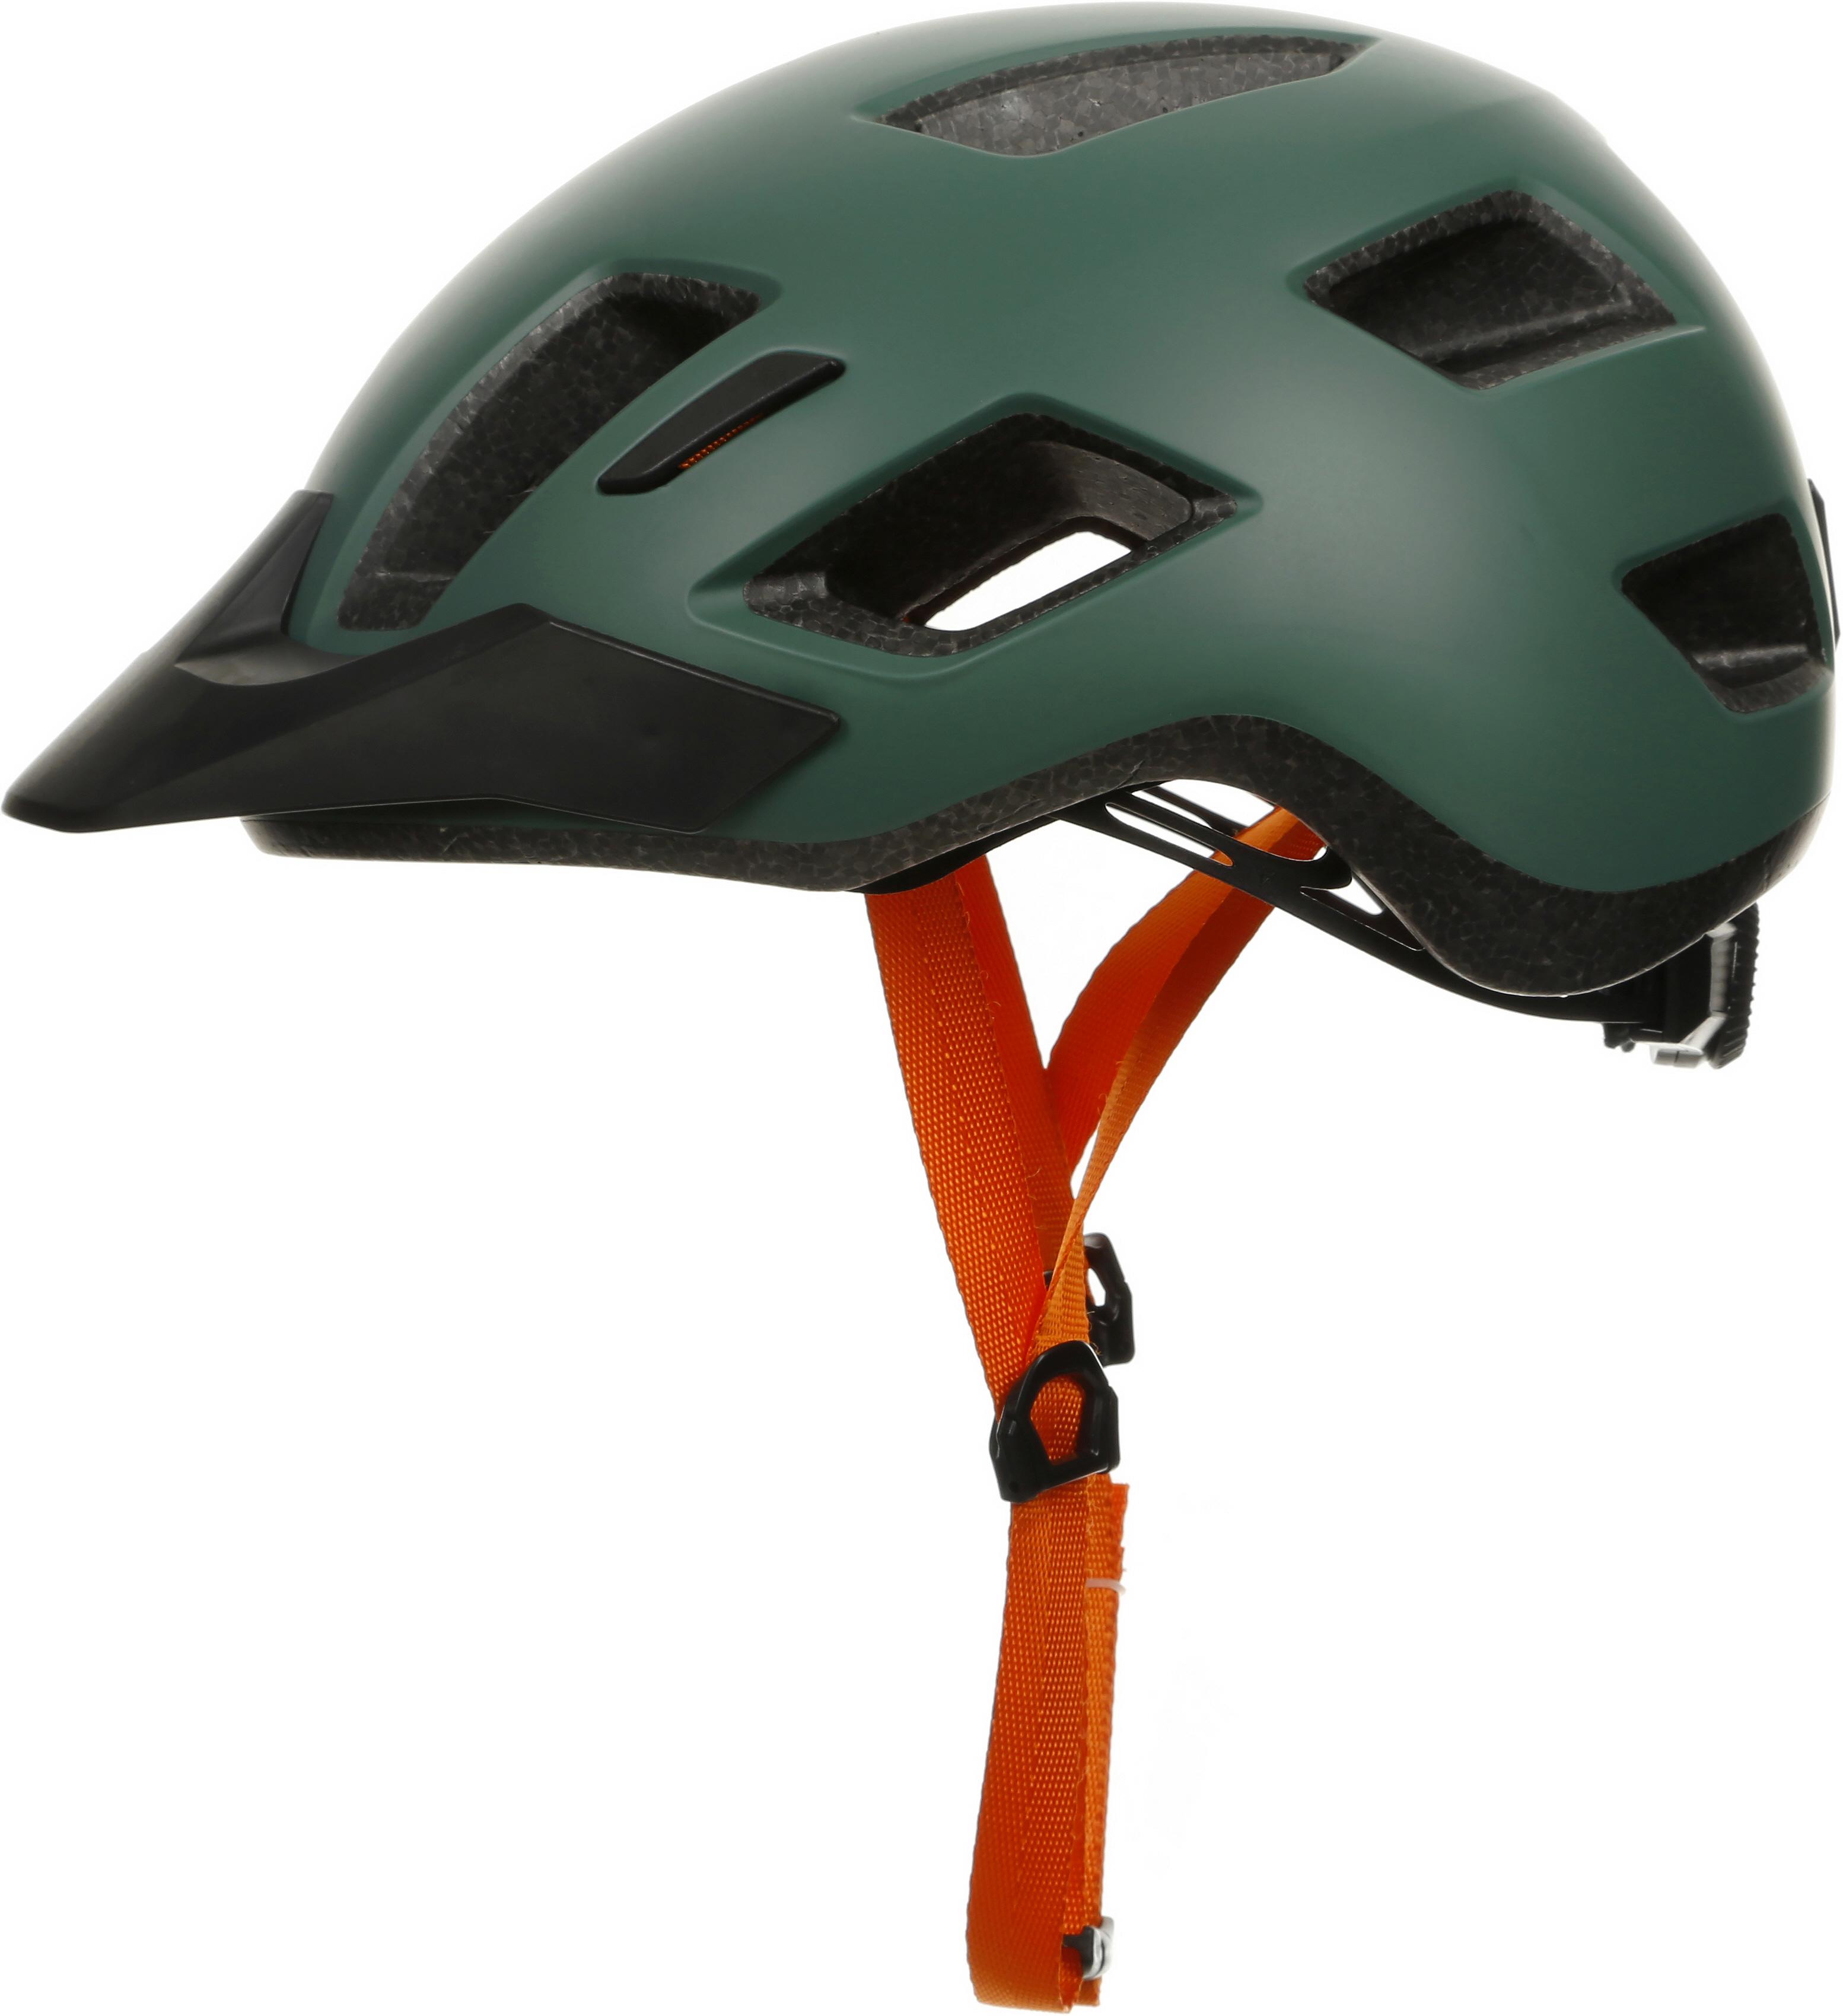 Halfords Transfer Helmet, Earth Green - Large